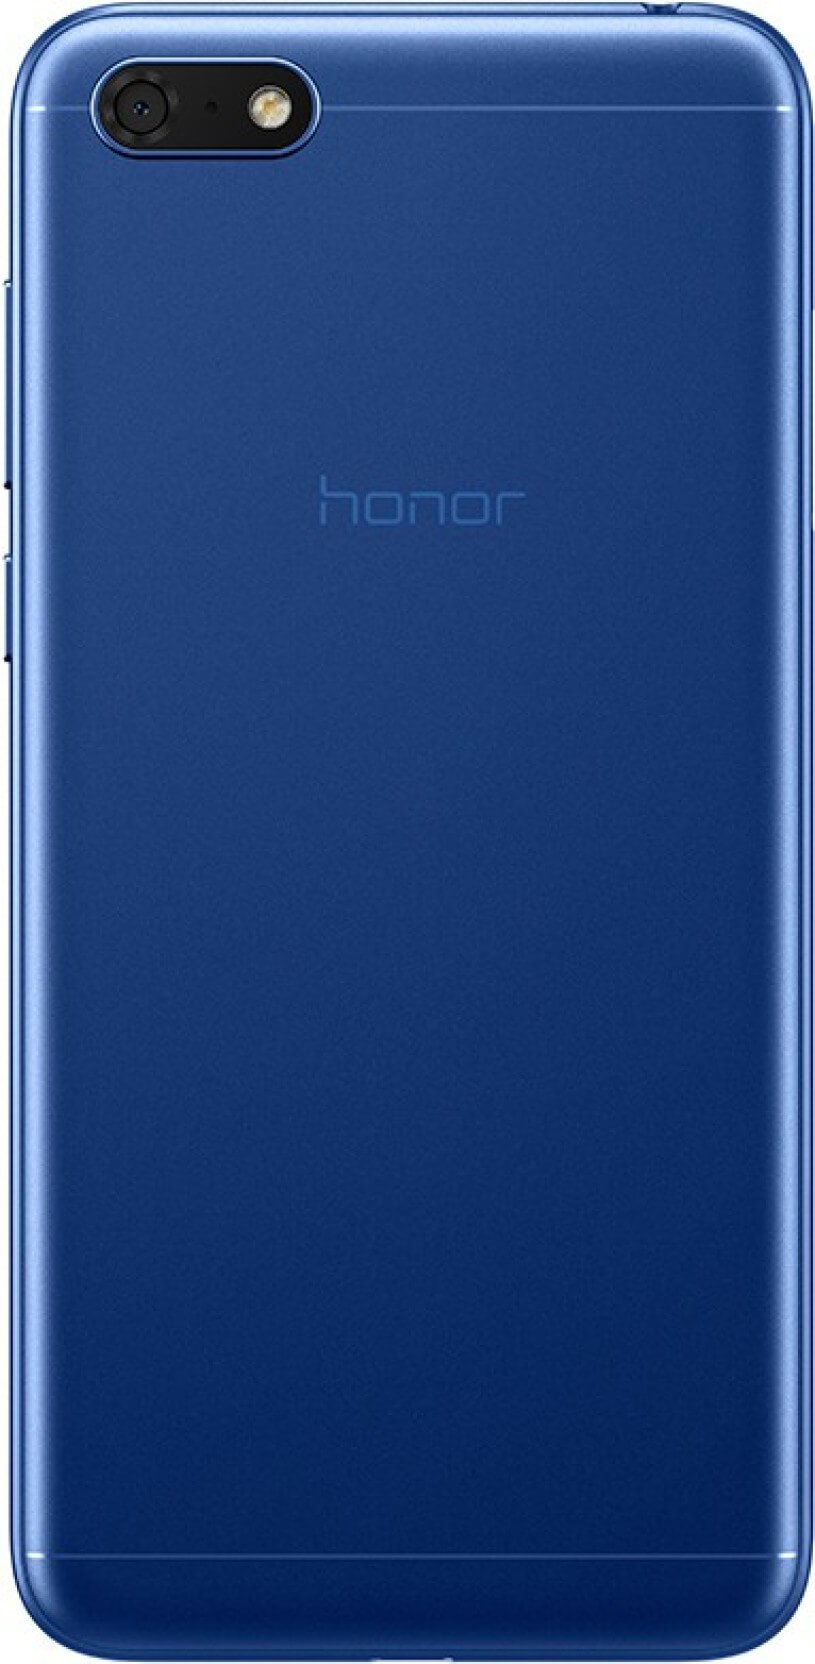 Honor 7S (2GB Ram 16GB Storage) 5.45" Fullview Display, 13MP Rear Camera, 5MP Front Camera - Blue